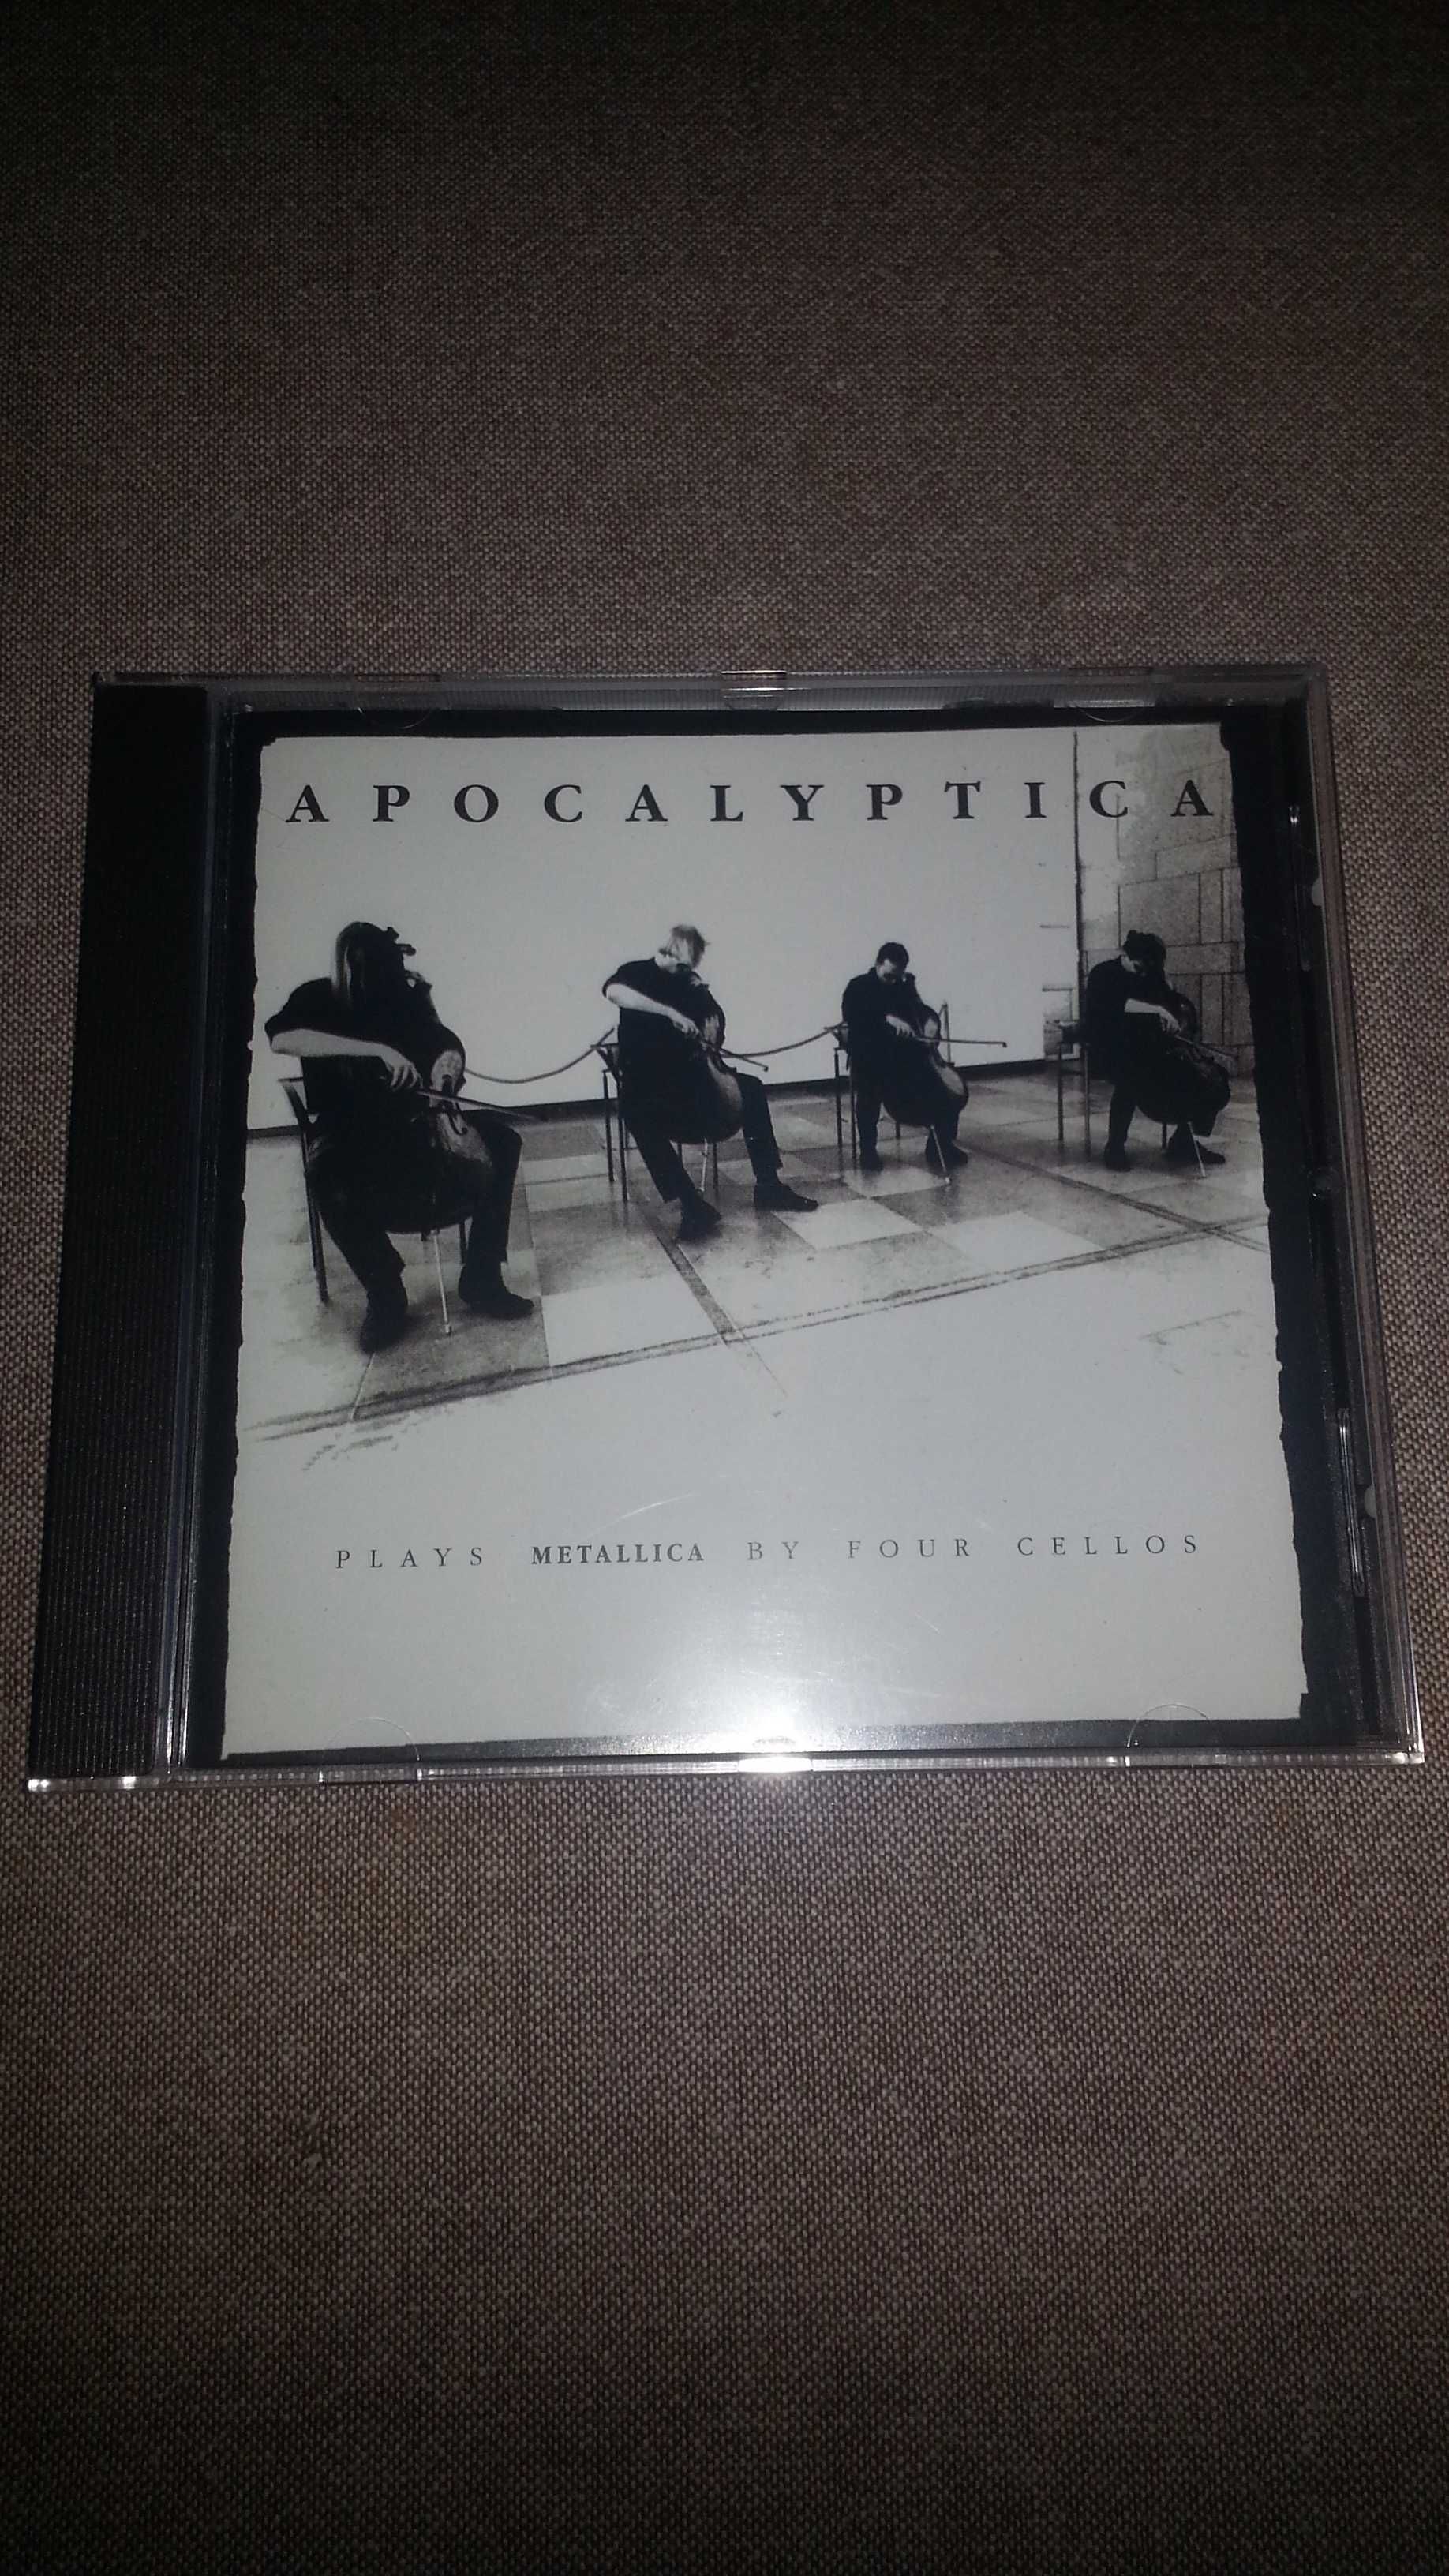 Apocalyptica - Plays metallica by four cellos